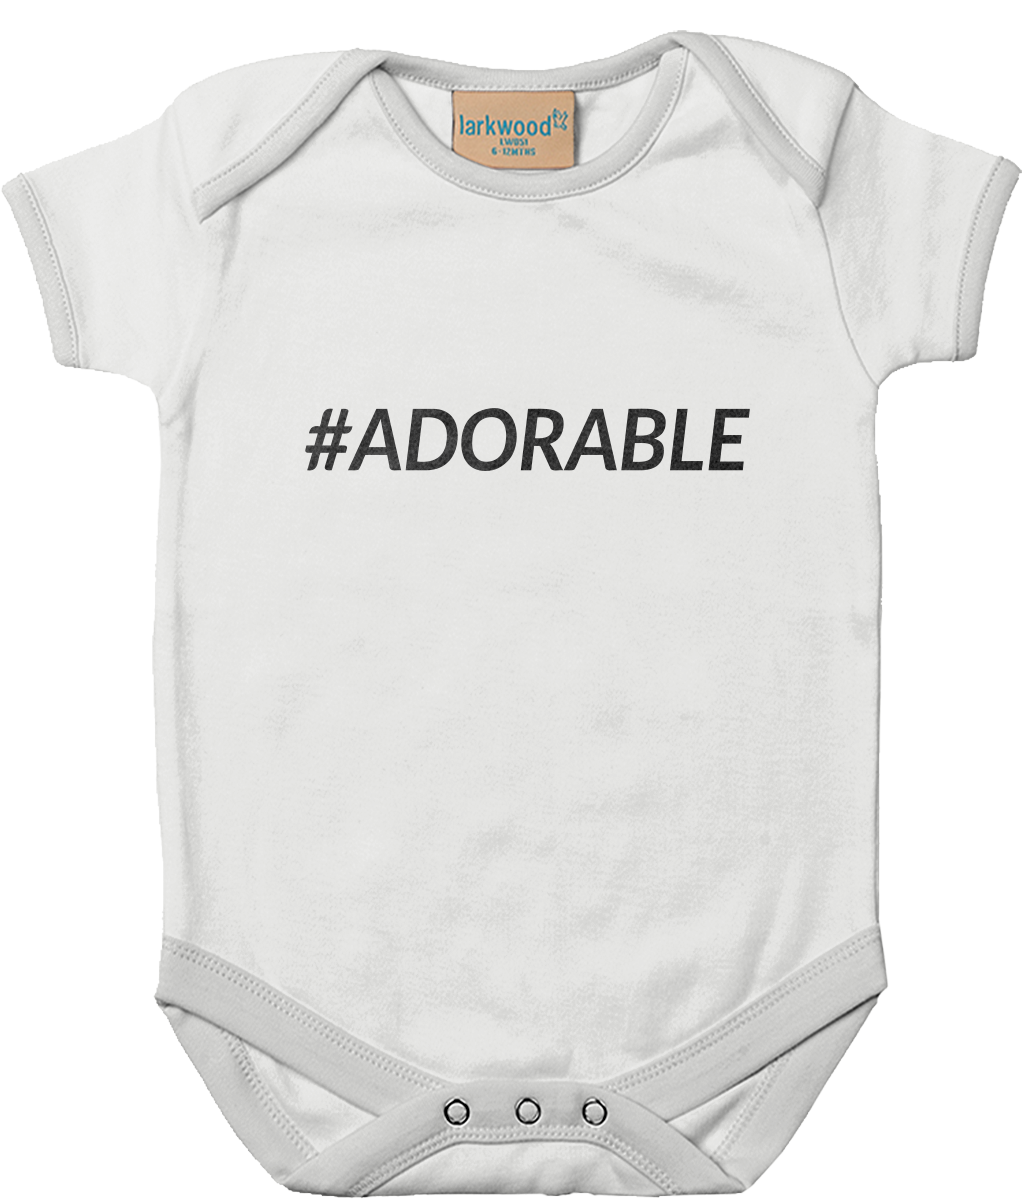 #Adorable Baby Bodysuit